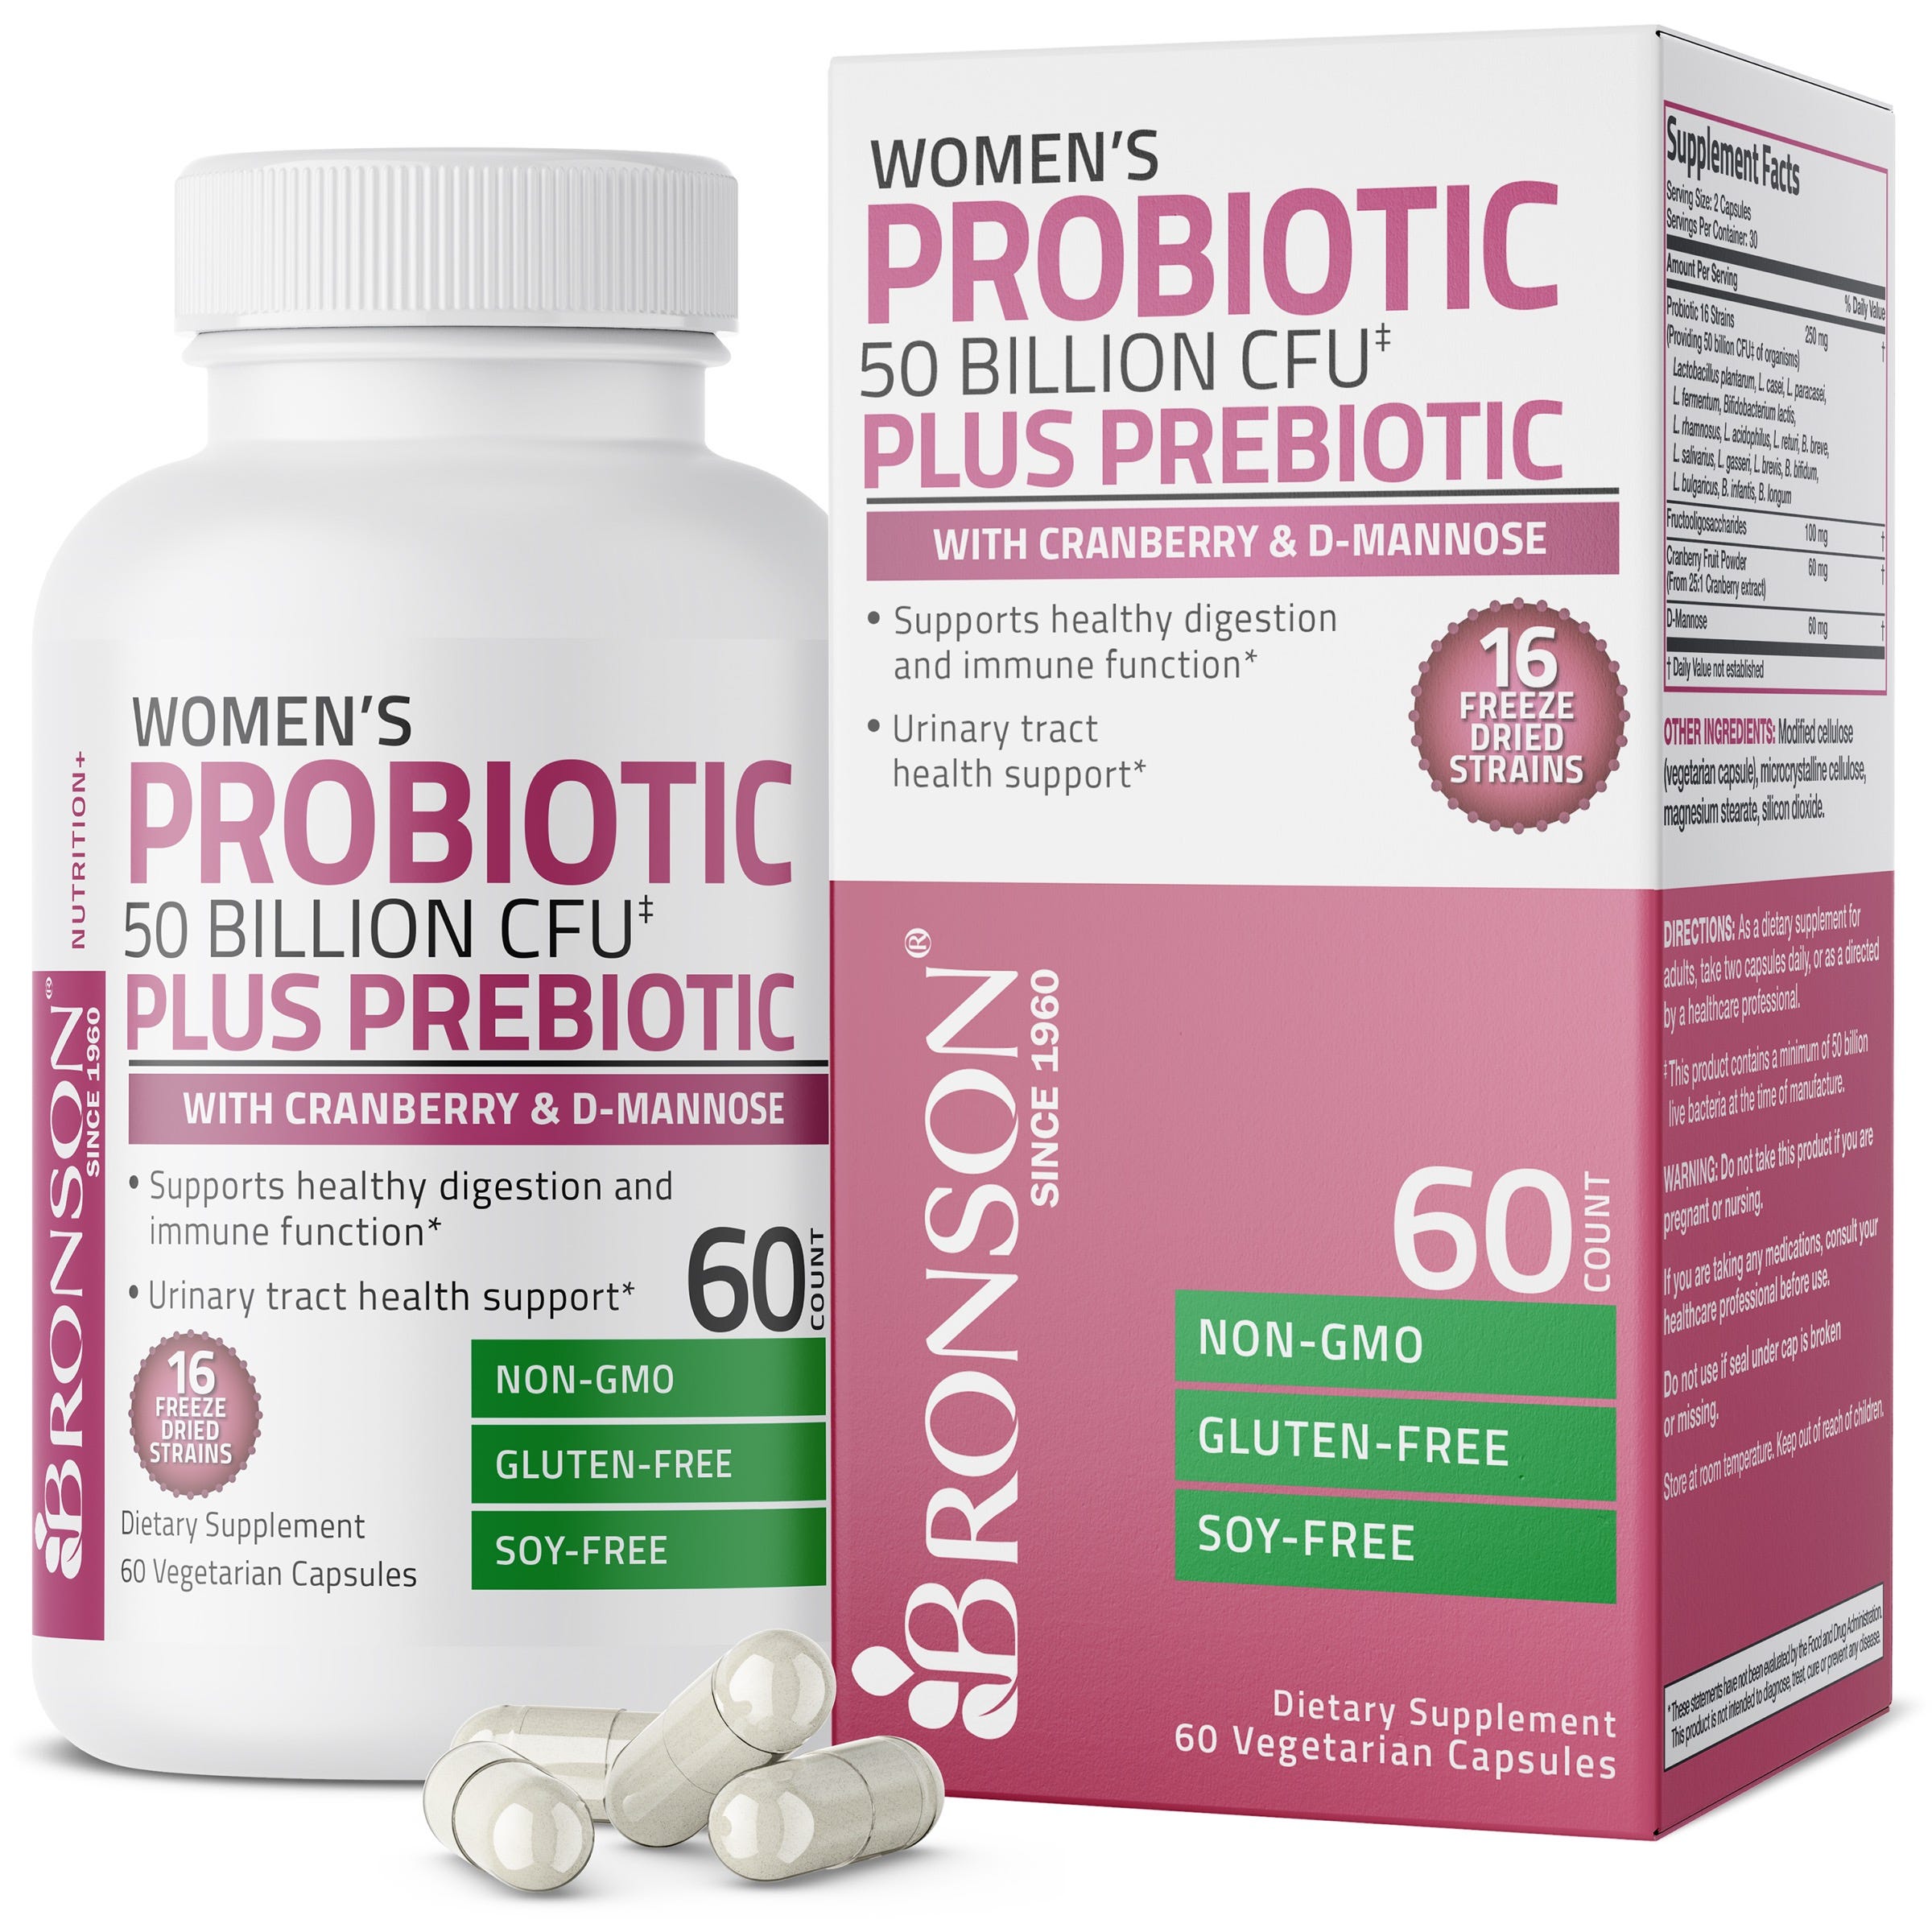 Probiotic Plus Prebiotic For Women - 50 Billion CFU - 60 Vegetarian Capsules